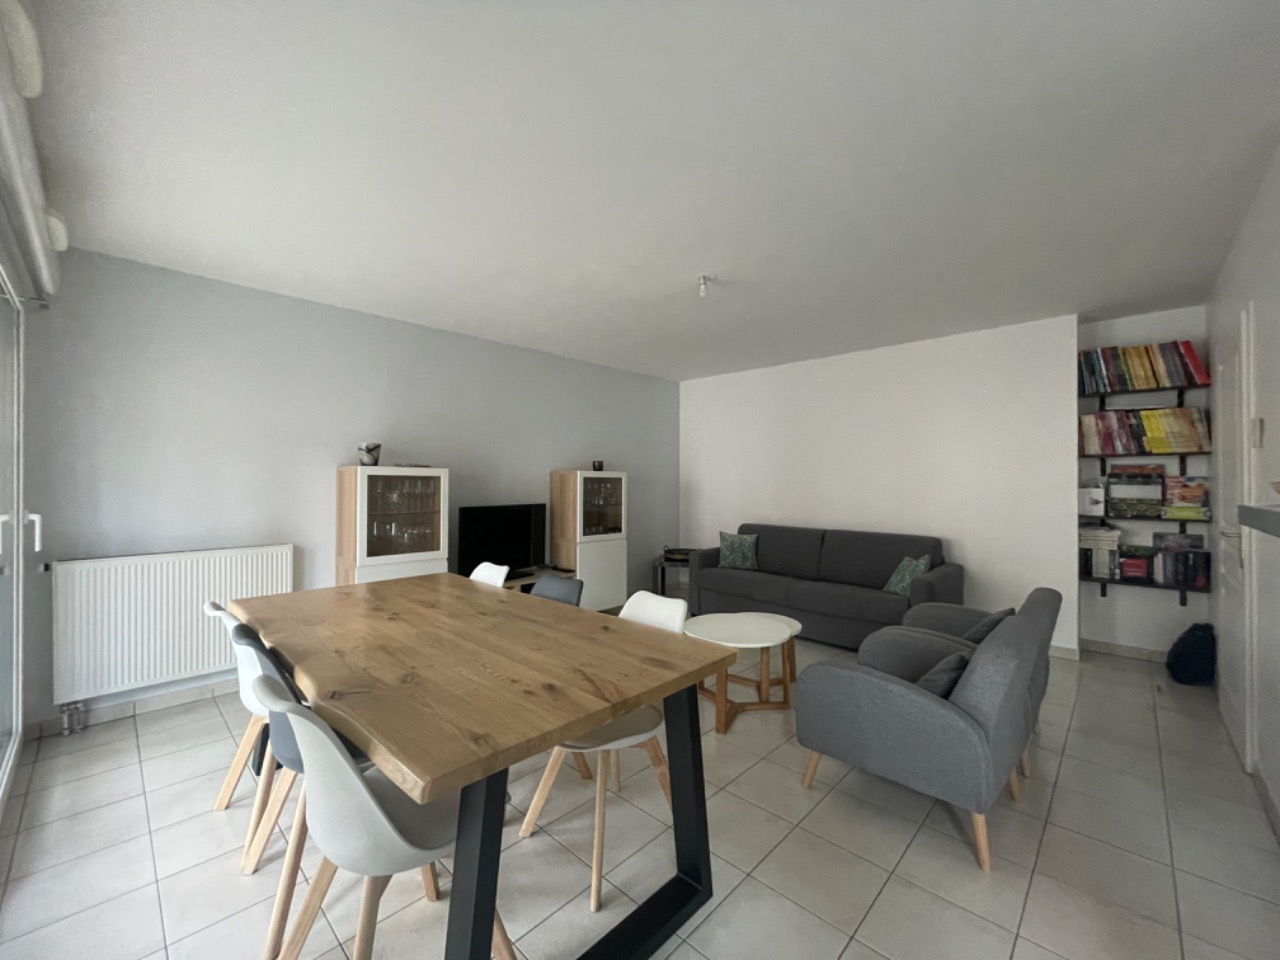 Vente appartement 59000 Lille - Cormontaigne - Appartement type 3 